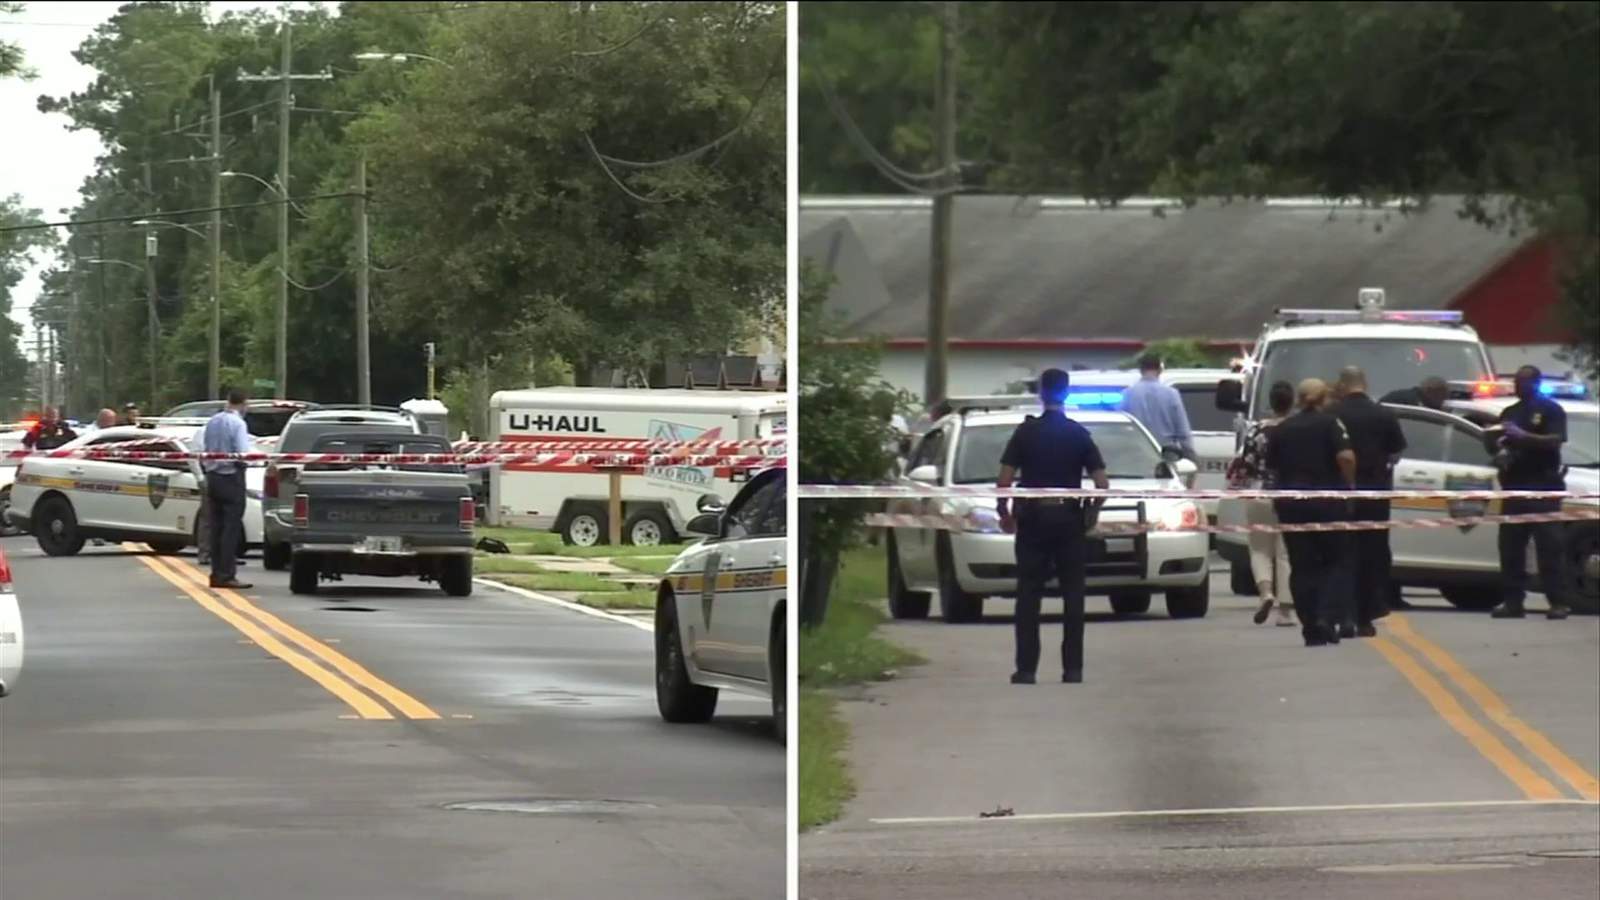 Jacksonville has deadly weekend with multiple shootings